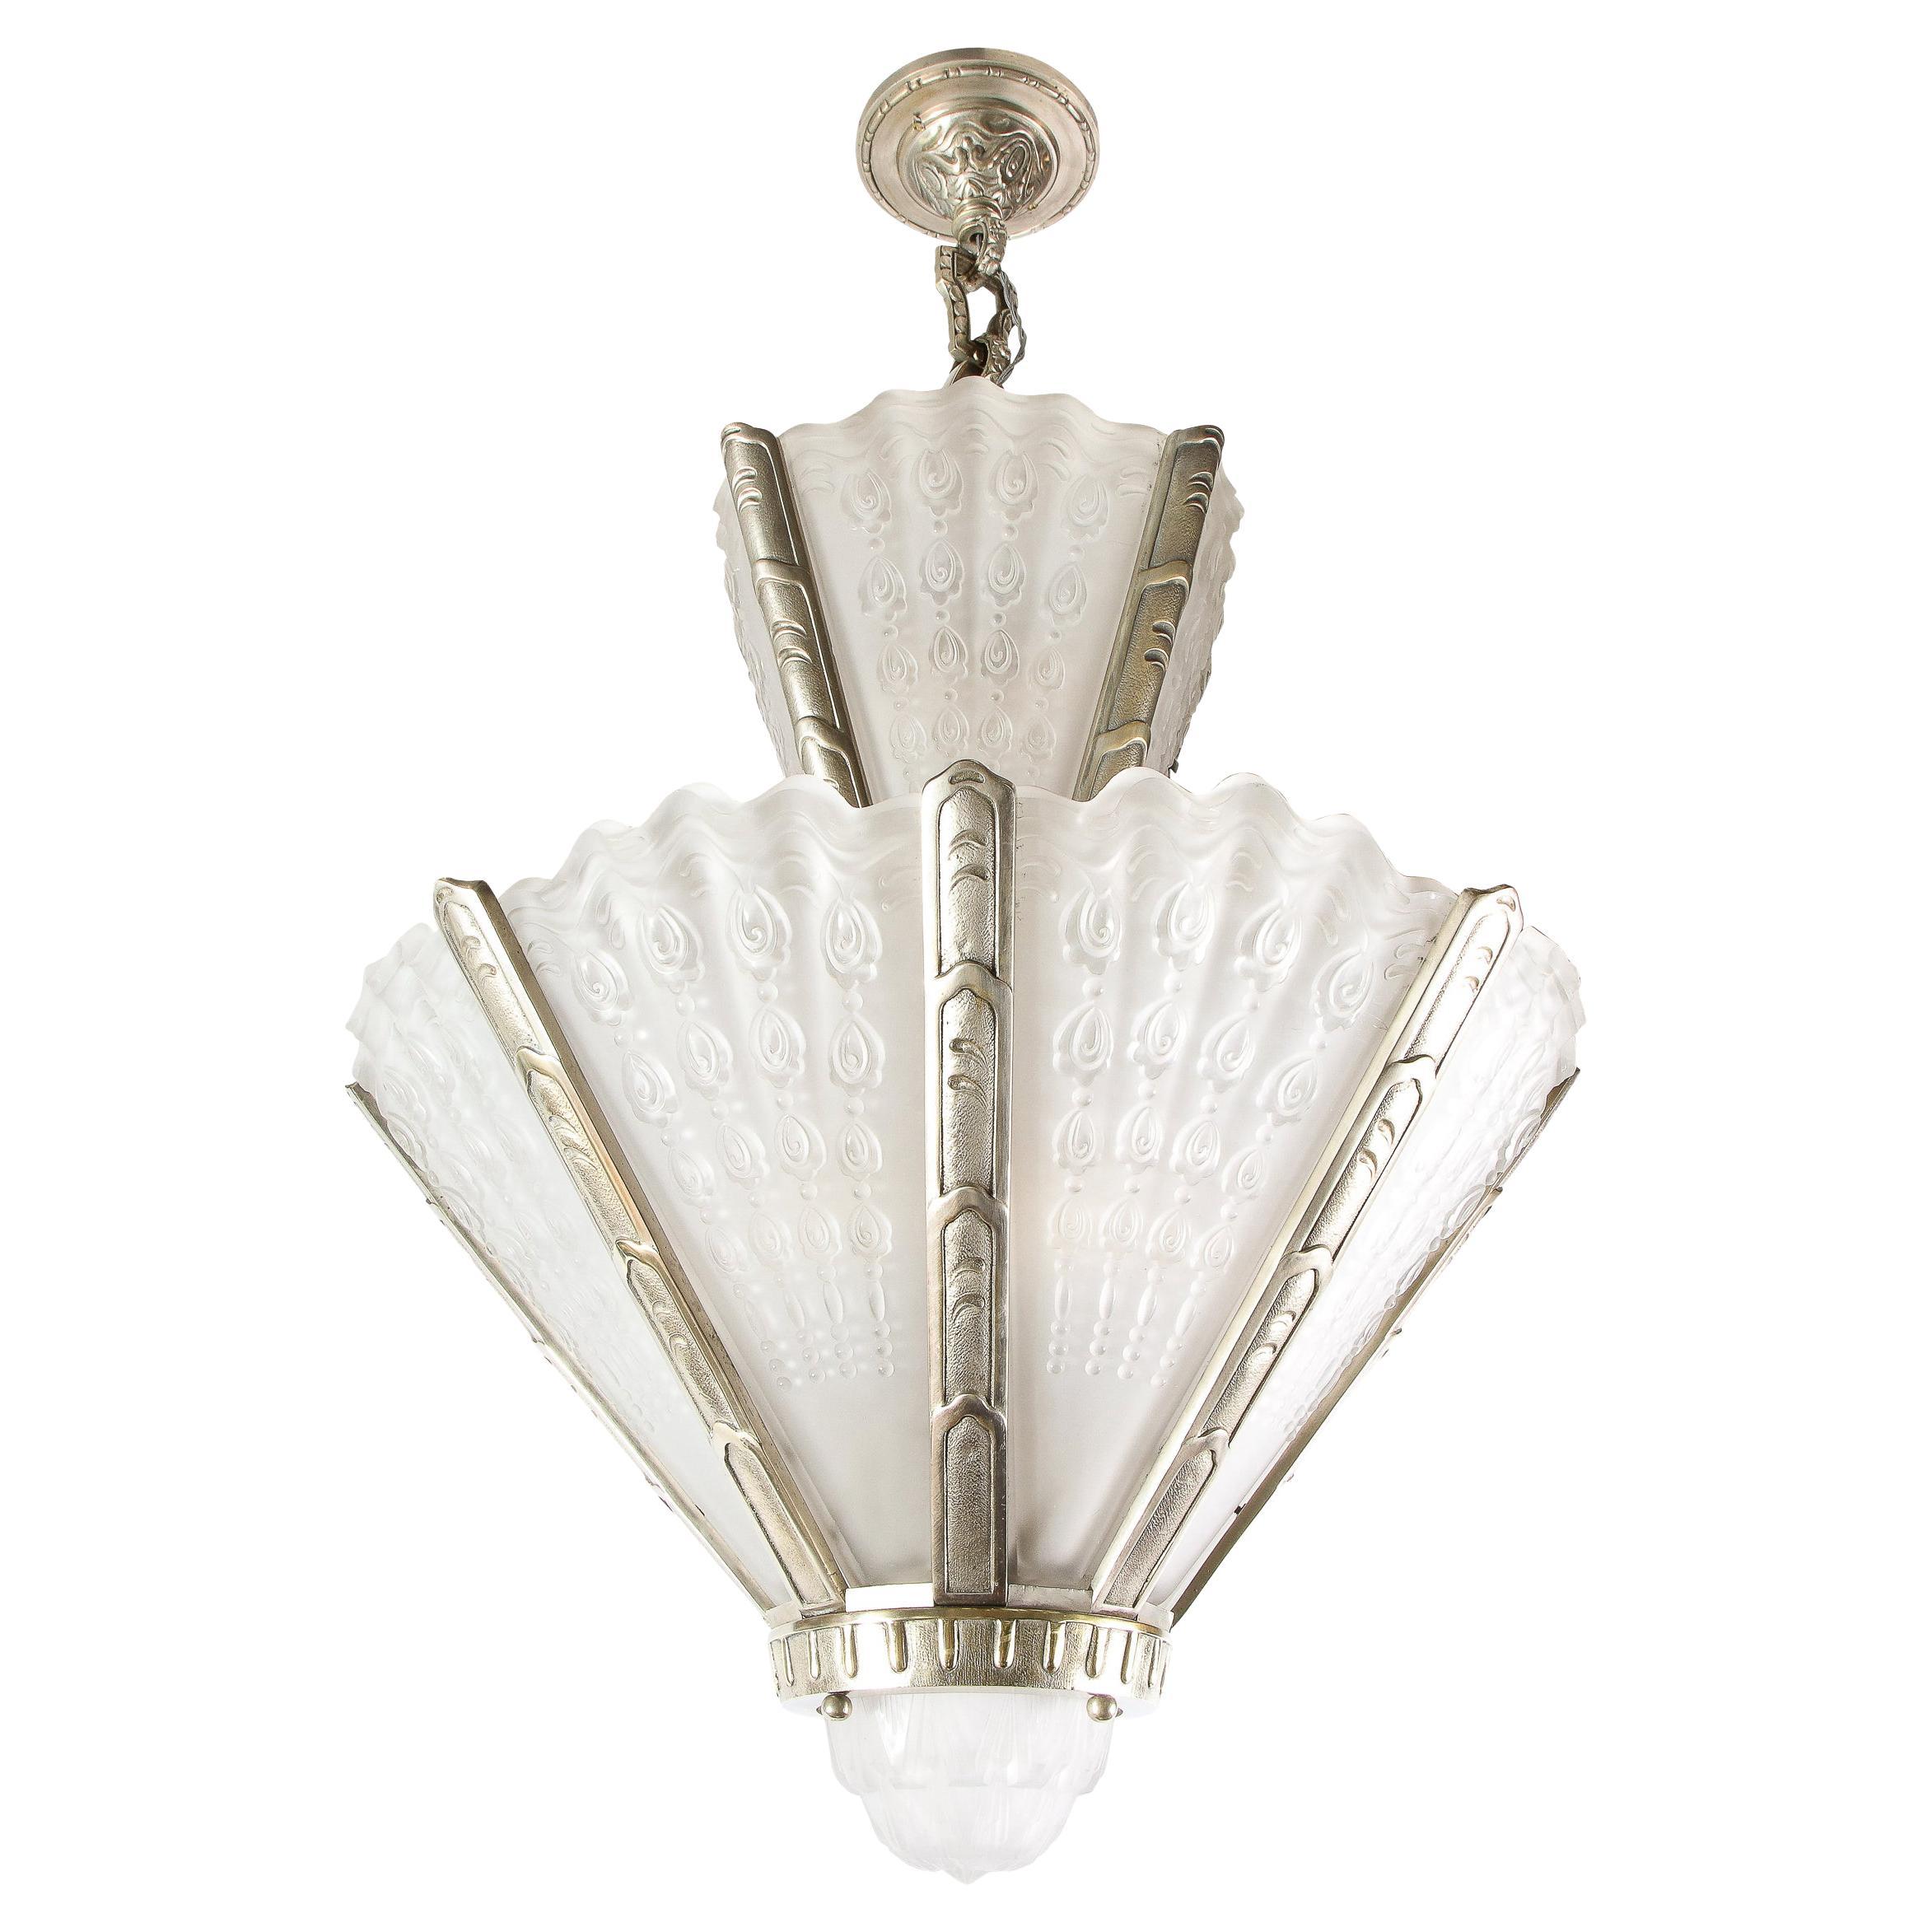 2 Art Deco art frosted glass chandelier tulips octagonal shape for original decoration